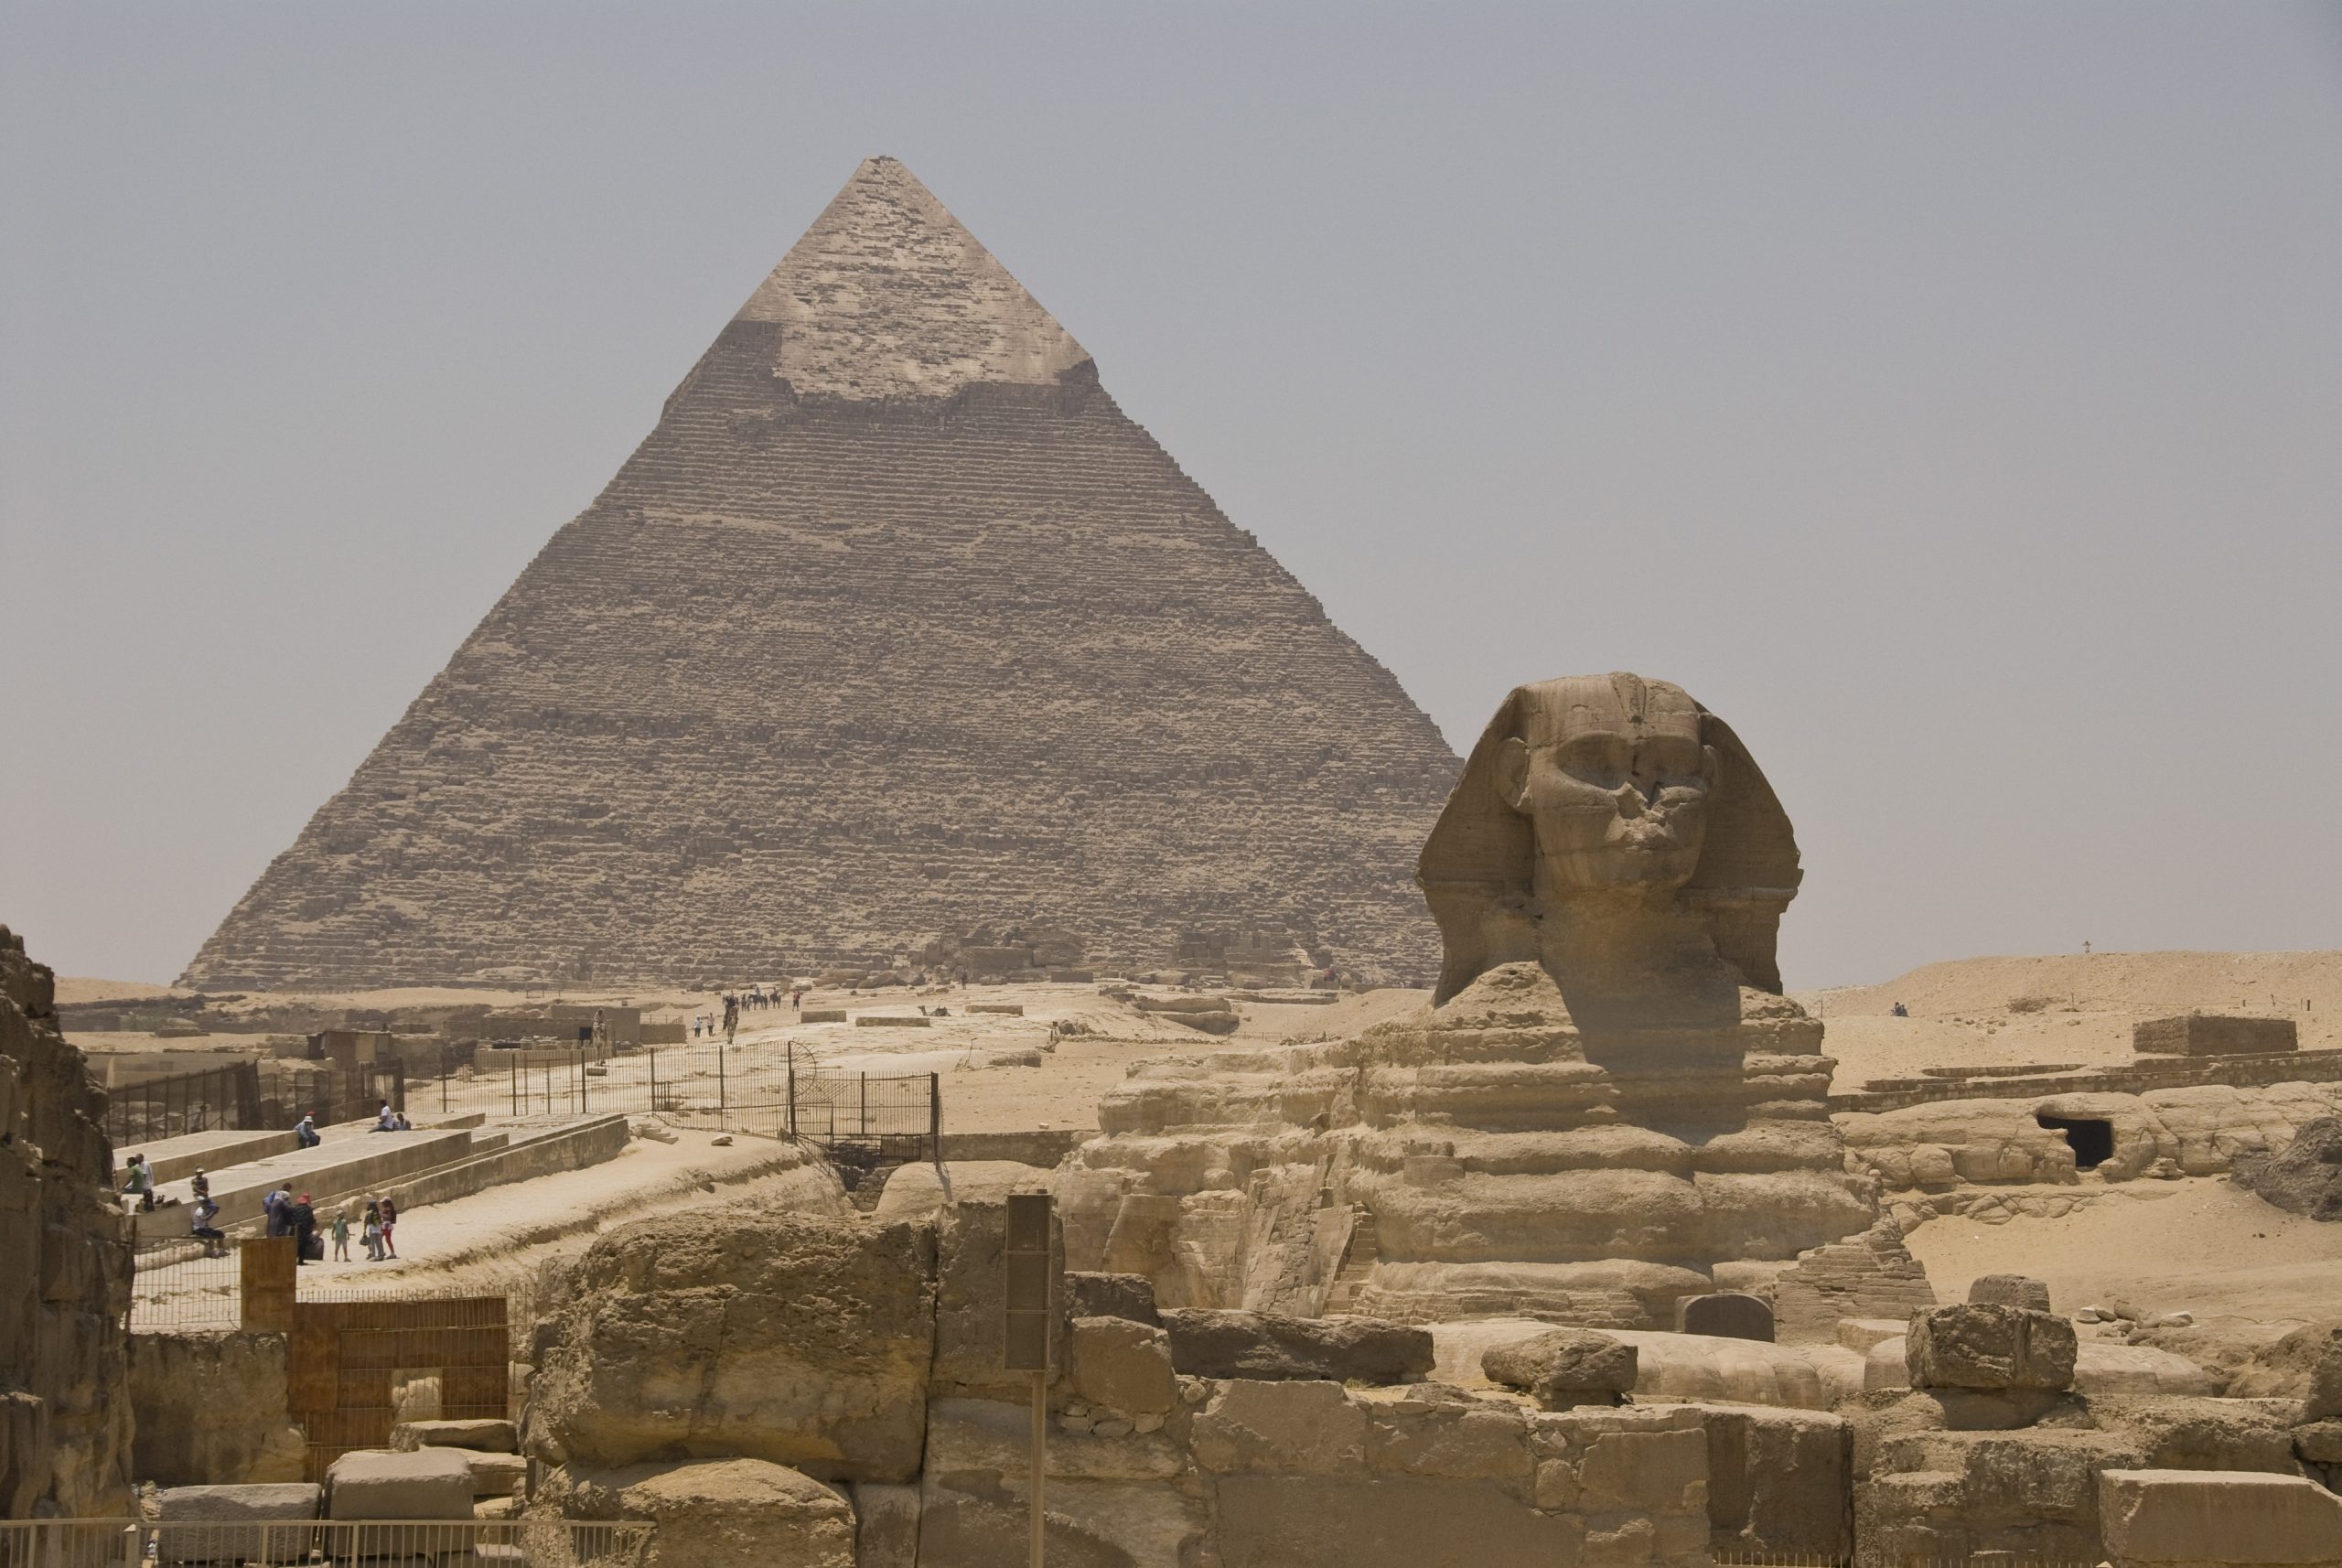 Pirâmides do Egito (Imagem: S. J. Pinkney/ Creative Common)